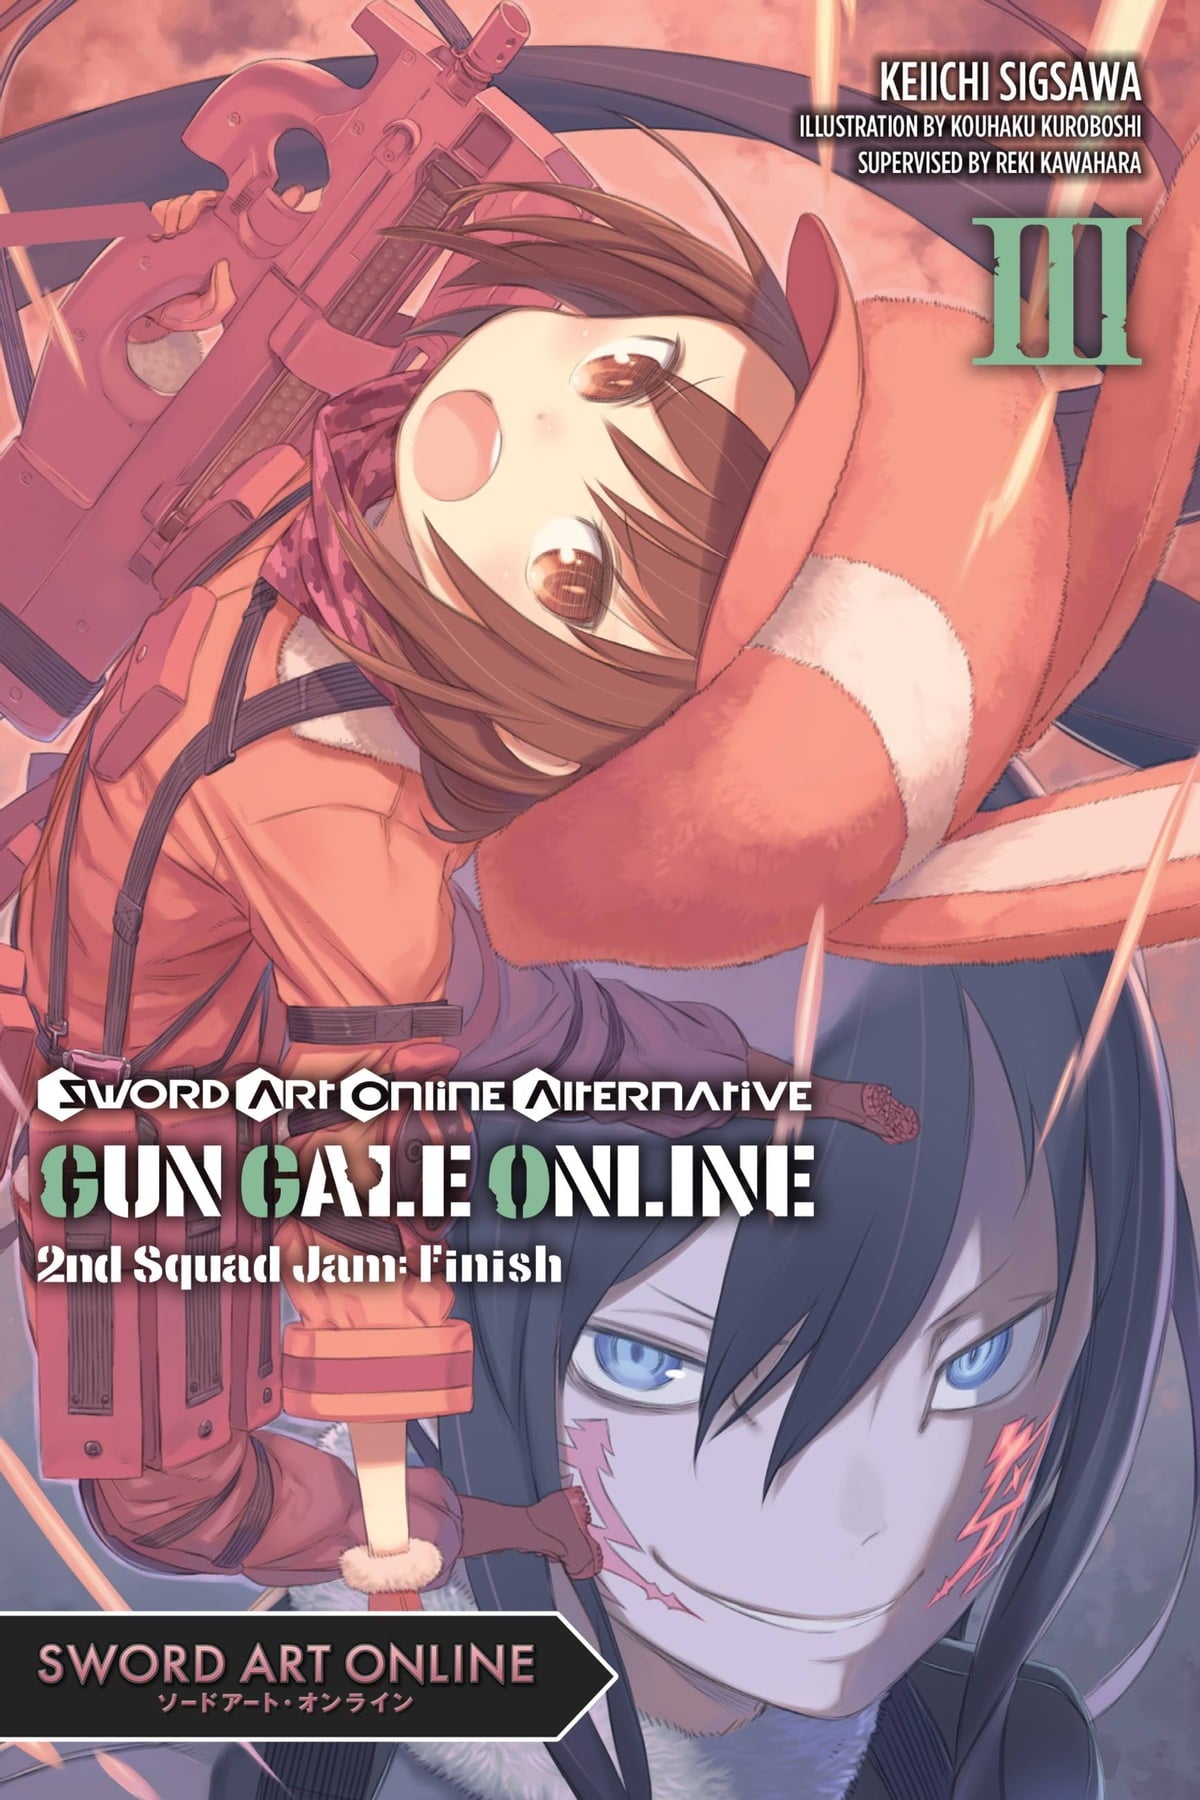 Sword Art Online Alternative Gun Gale Online Vol. 03 (Light Novel): Second Squad Jam: Finish